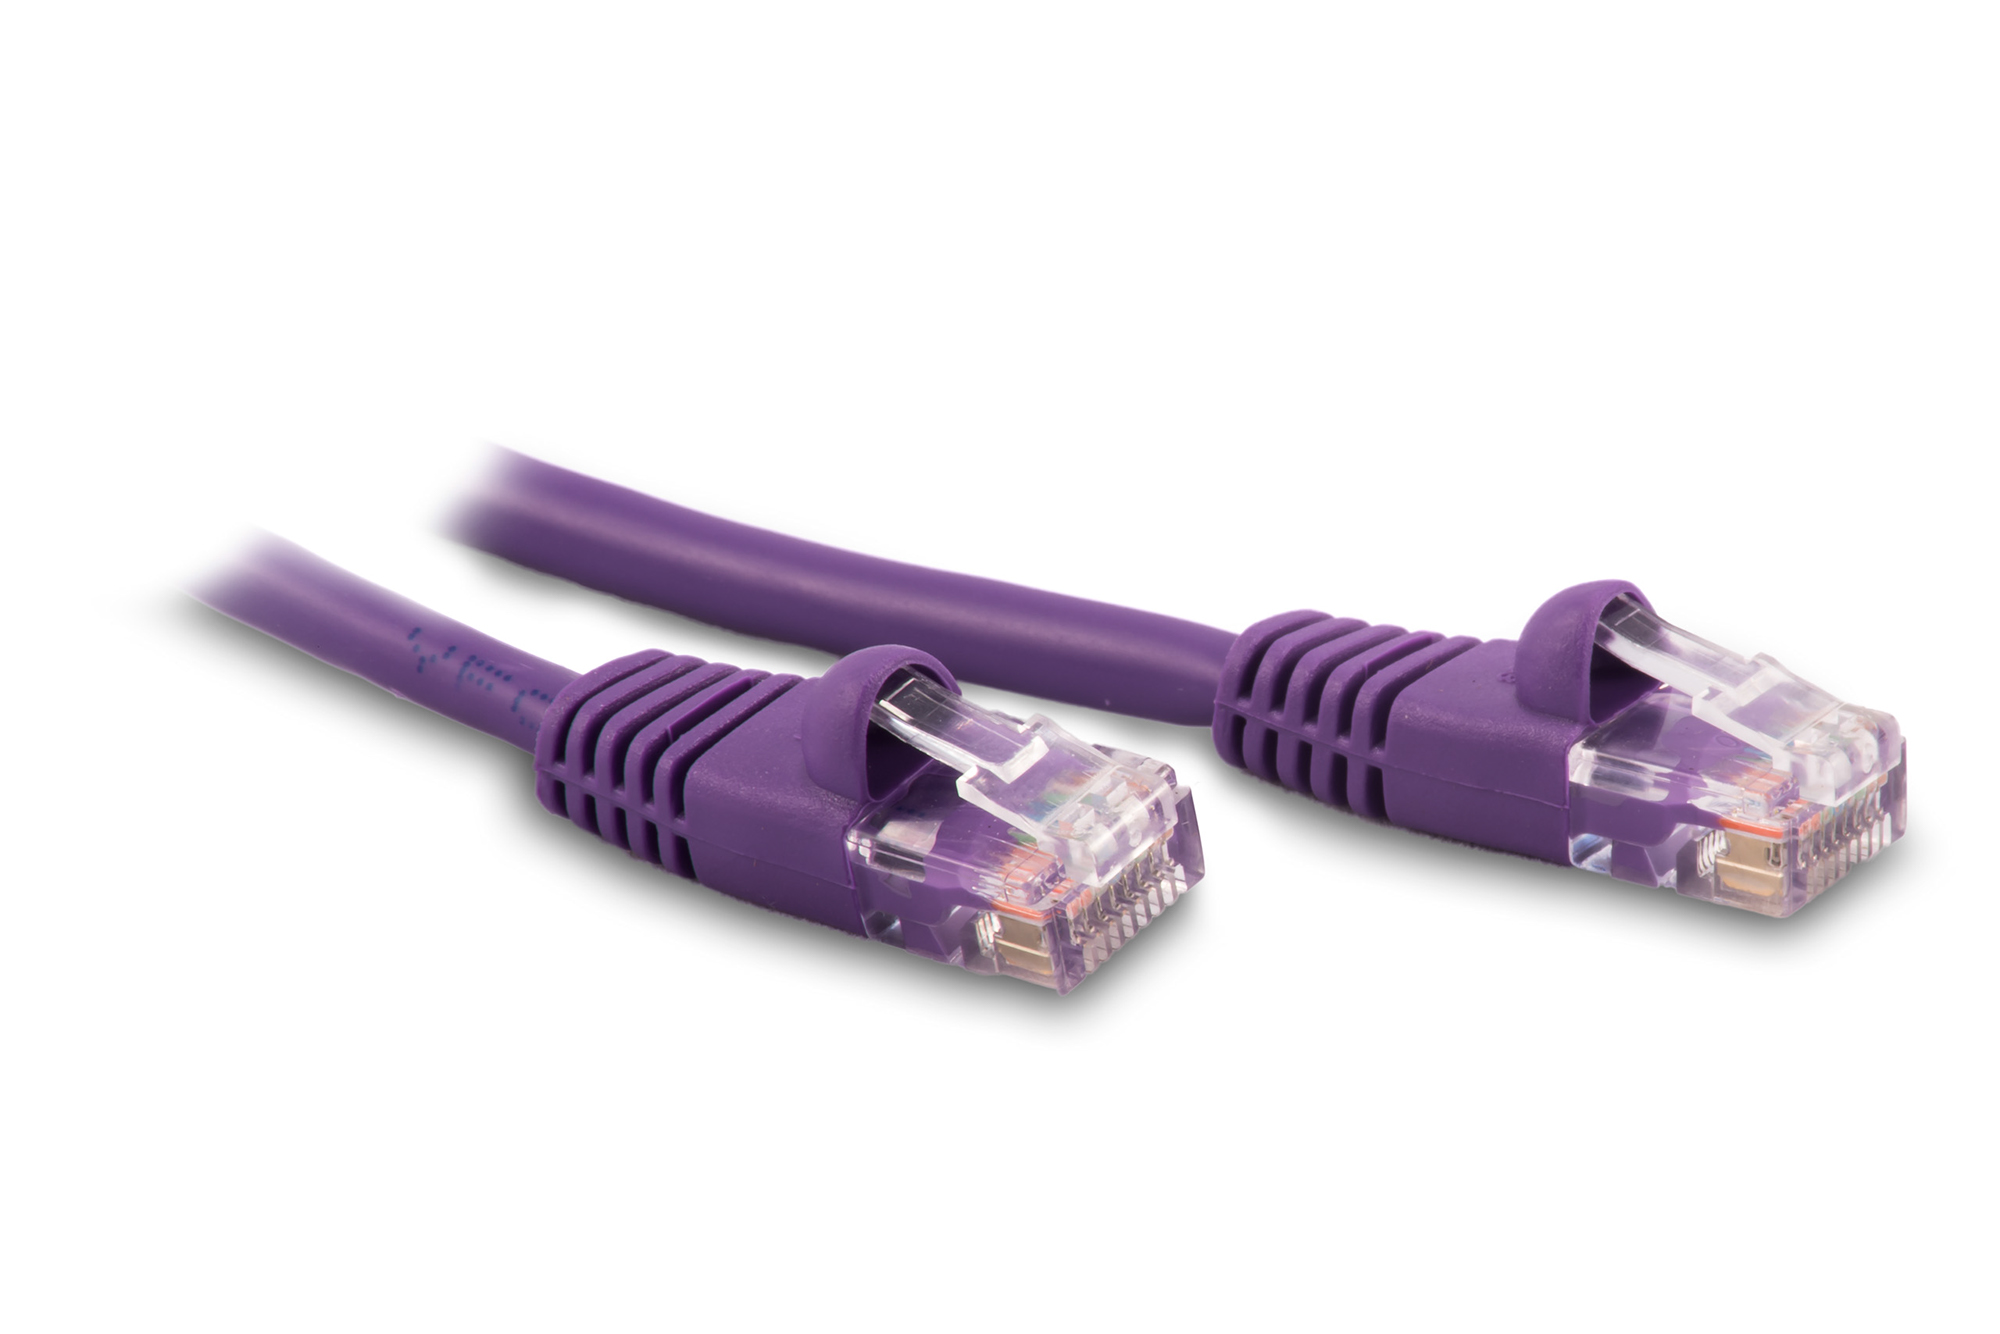 10ft Cat5e Ethernet Patch Cable - Violet Color - Snagless Boot, Stranded, RJ45, 350Mhz, 24AWG